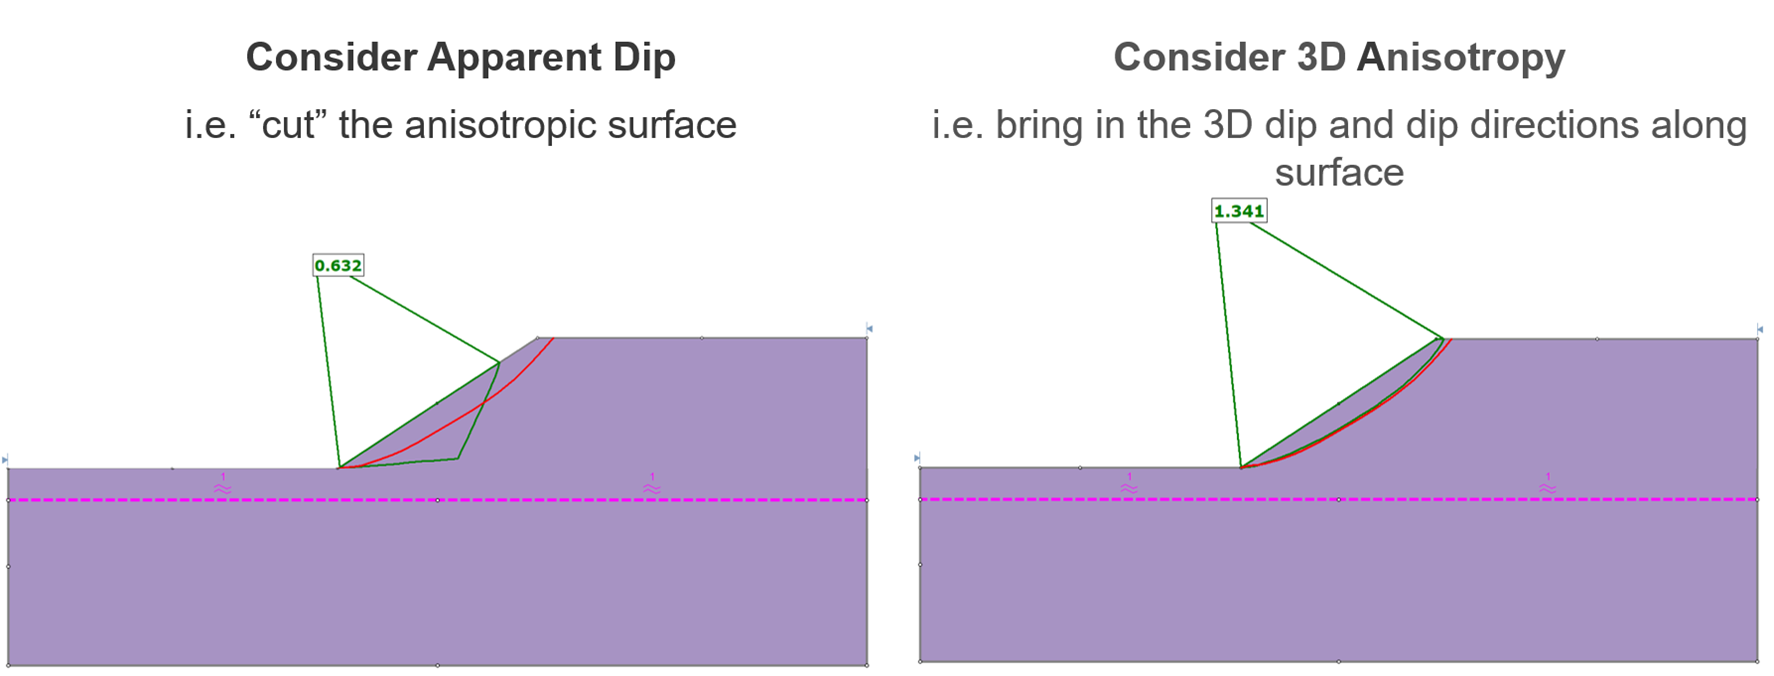 two models comparing Apparent dip vs 3D anisotropy